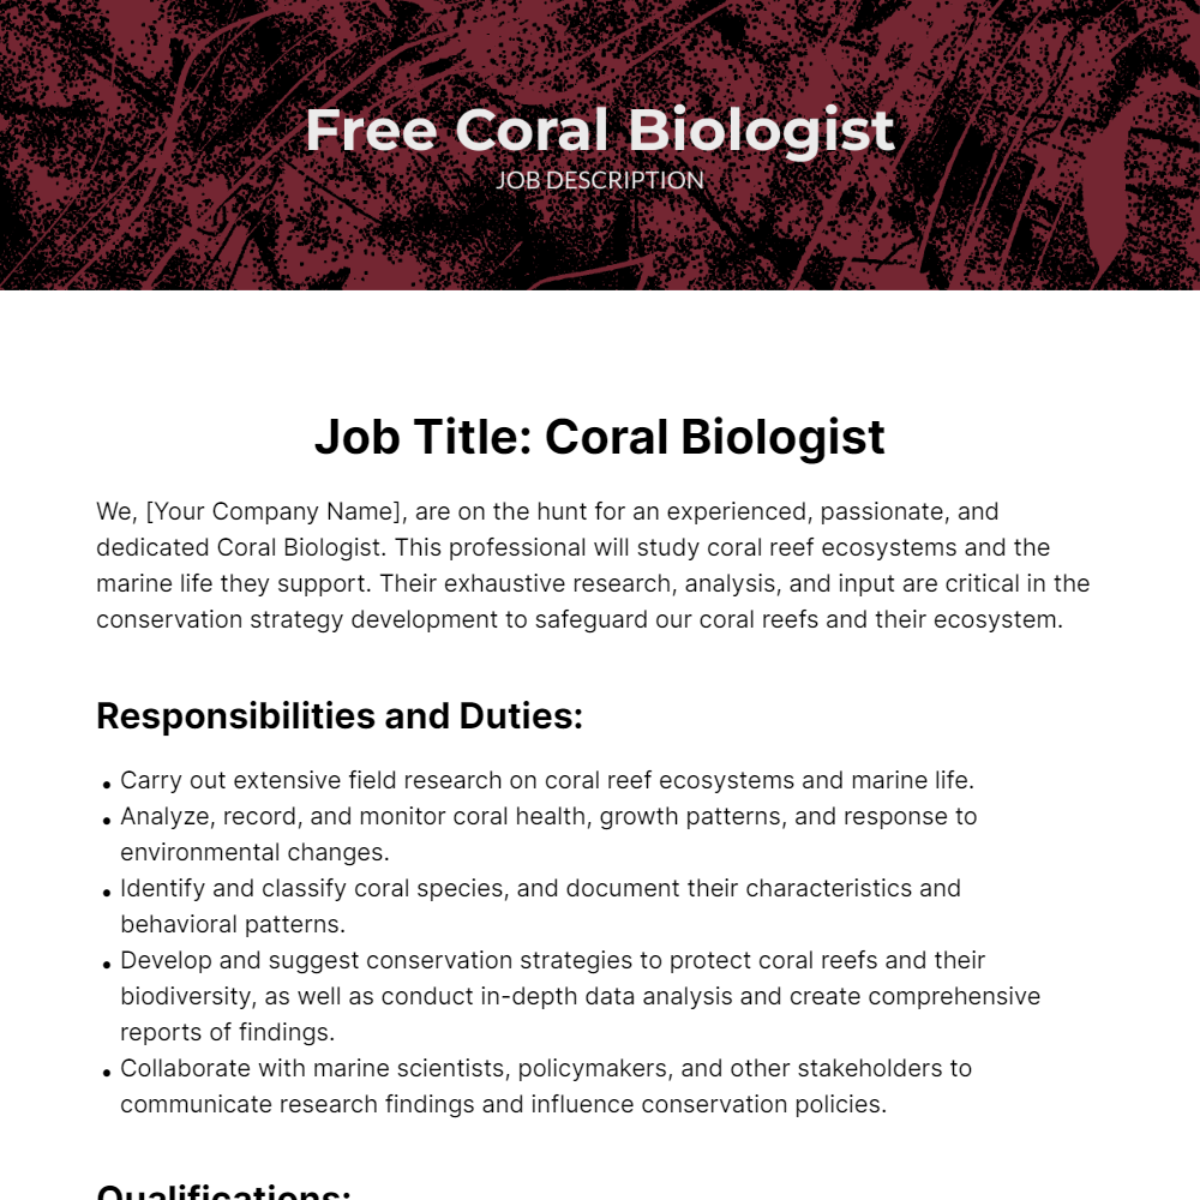 Free Coral Biologist Job Description Template